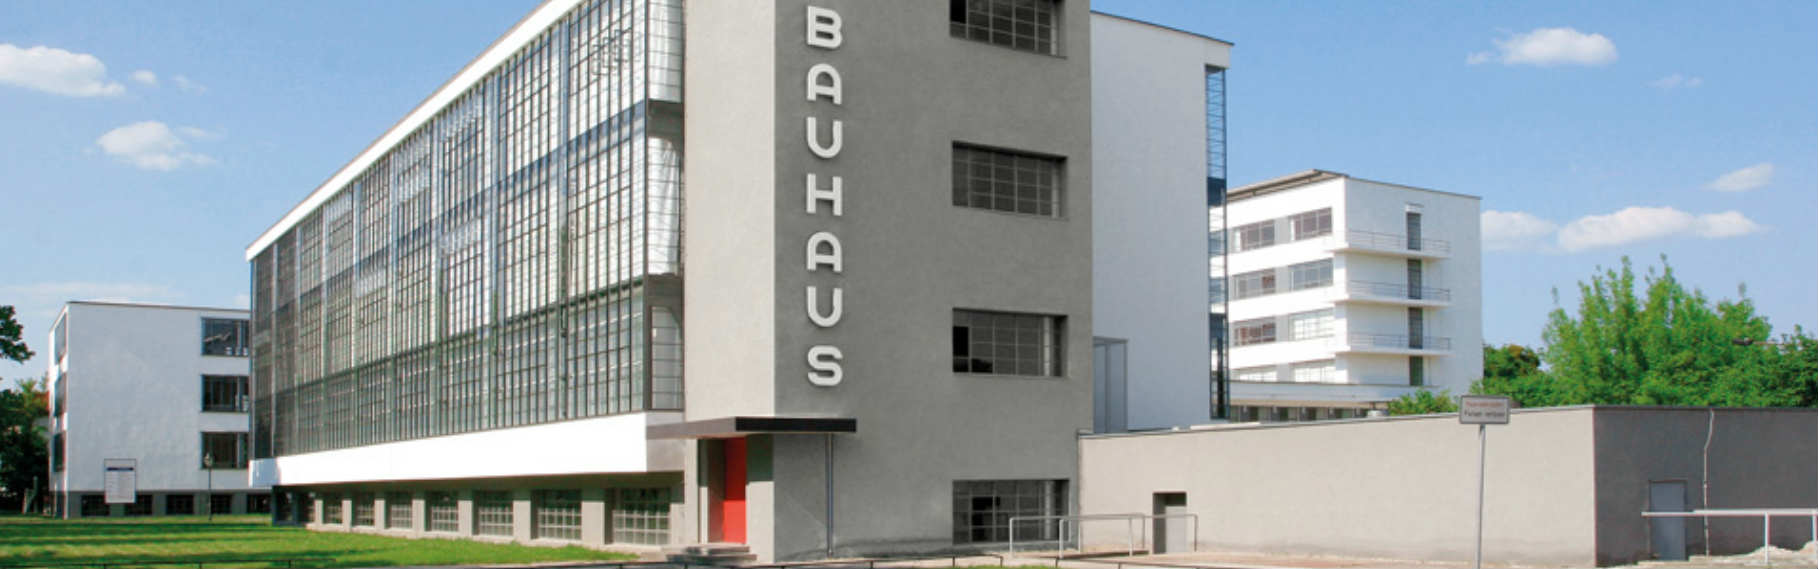 Bauhaus 100 — Sisustusstuudio Now